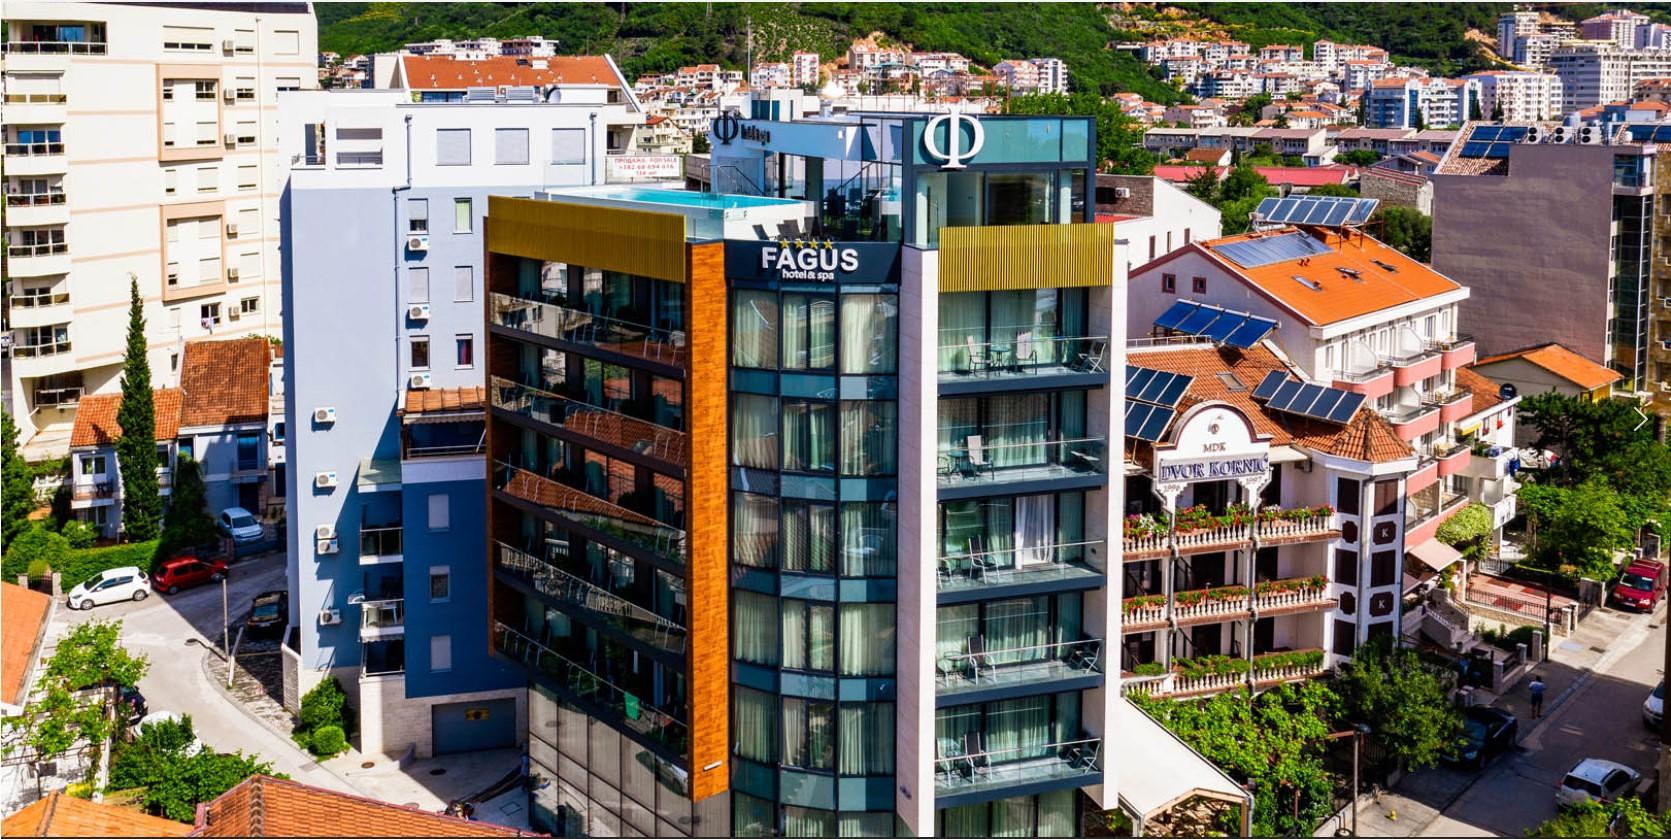 Fagus Hotel & SPA - Czarnogóra